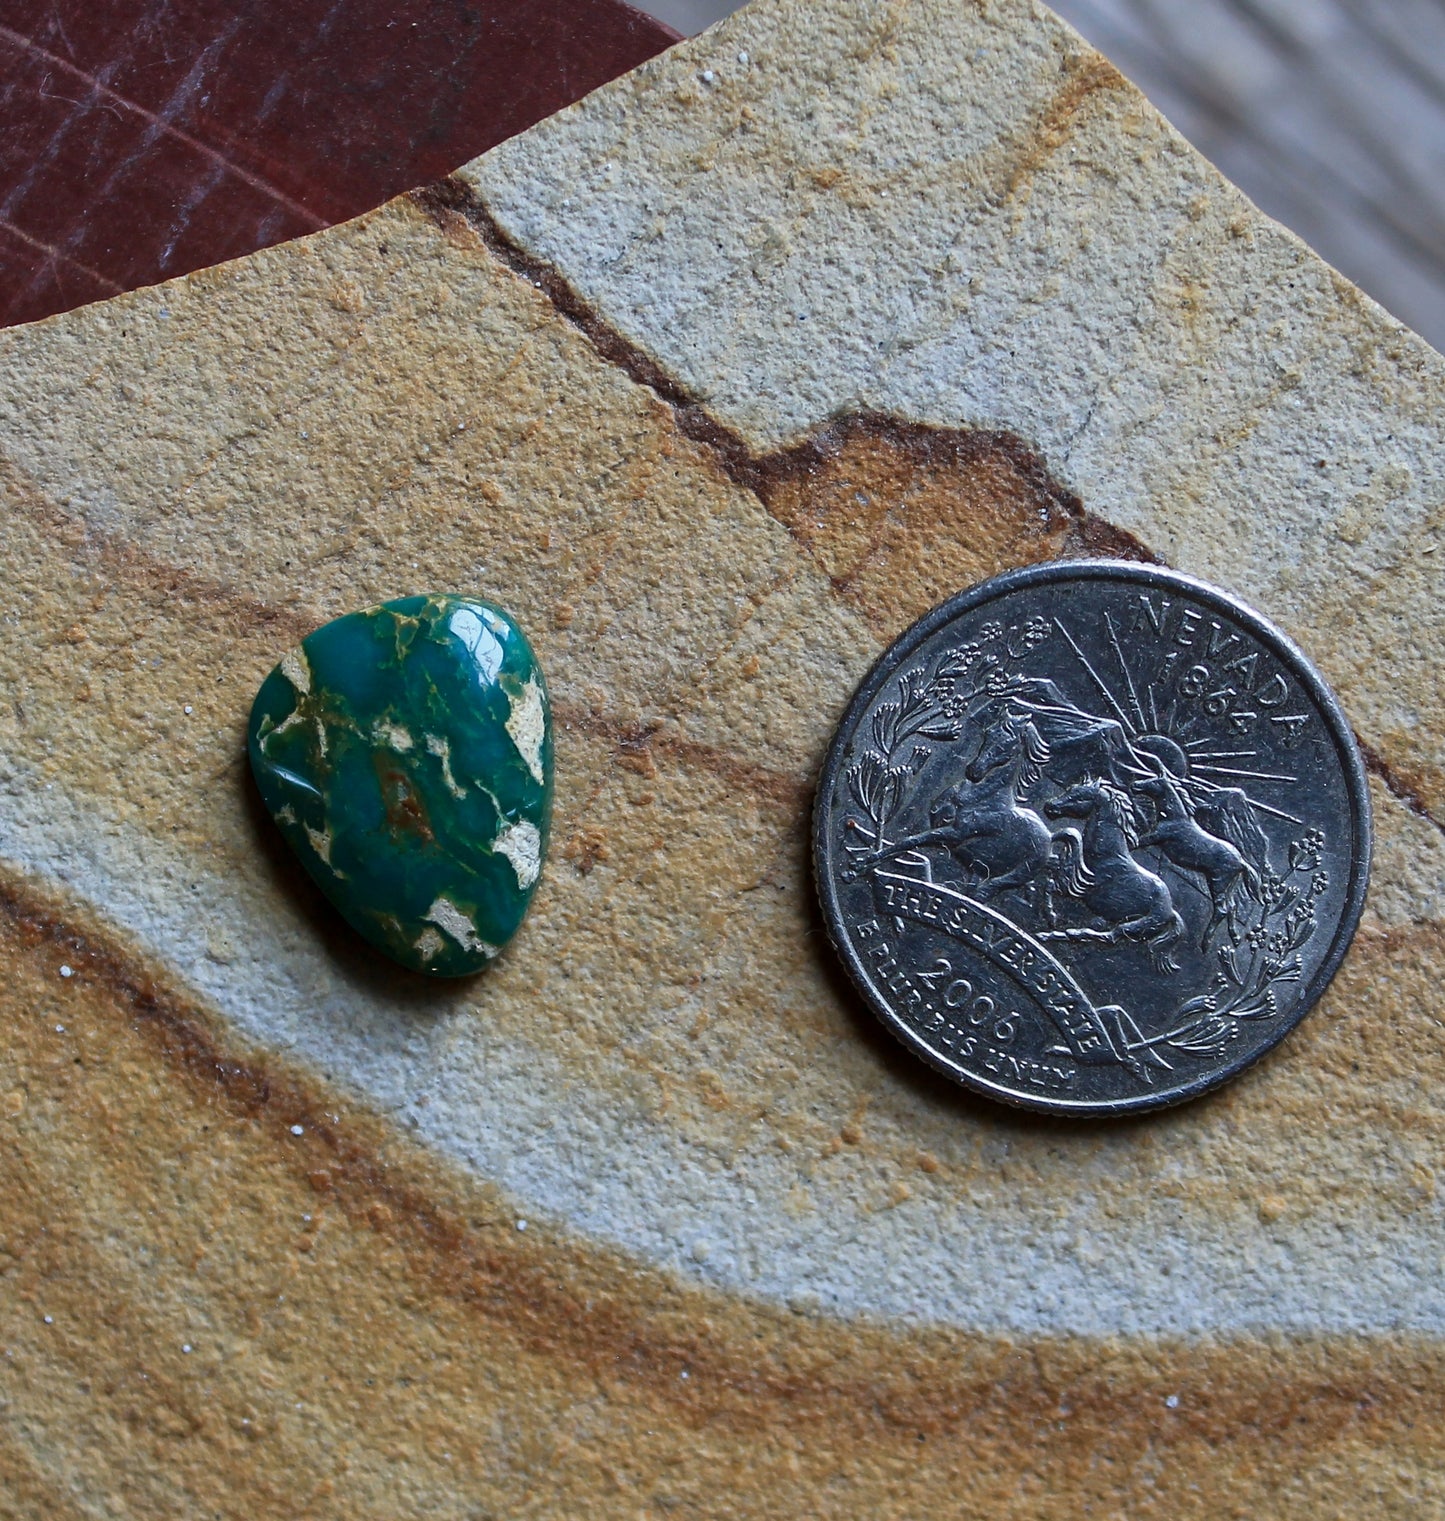 6 carat dark green Stone Mountain Turquoise cabochon